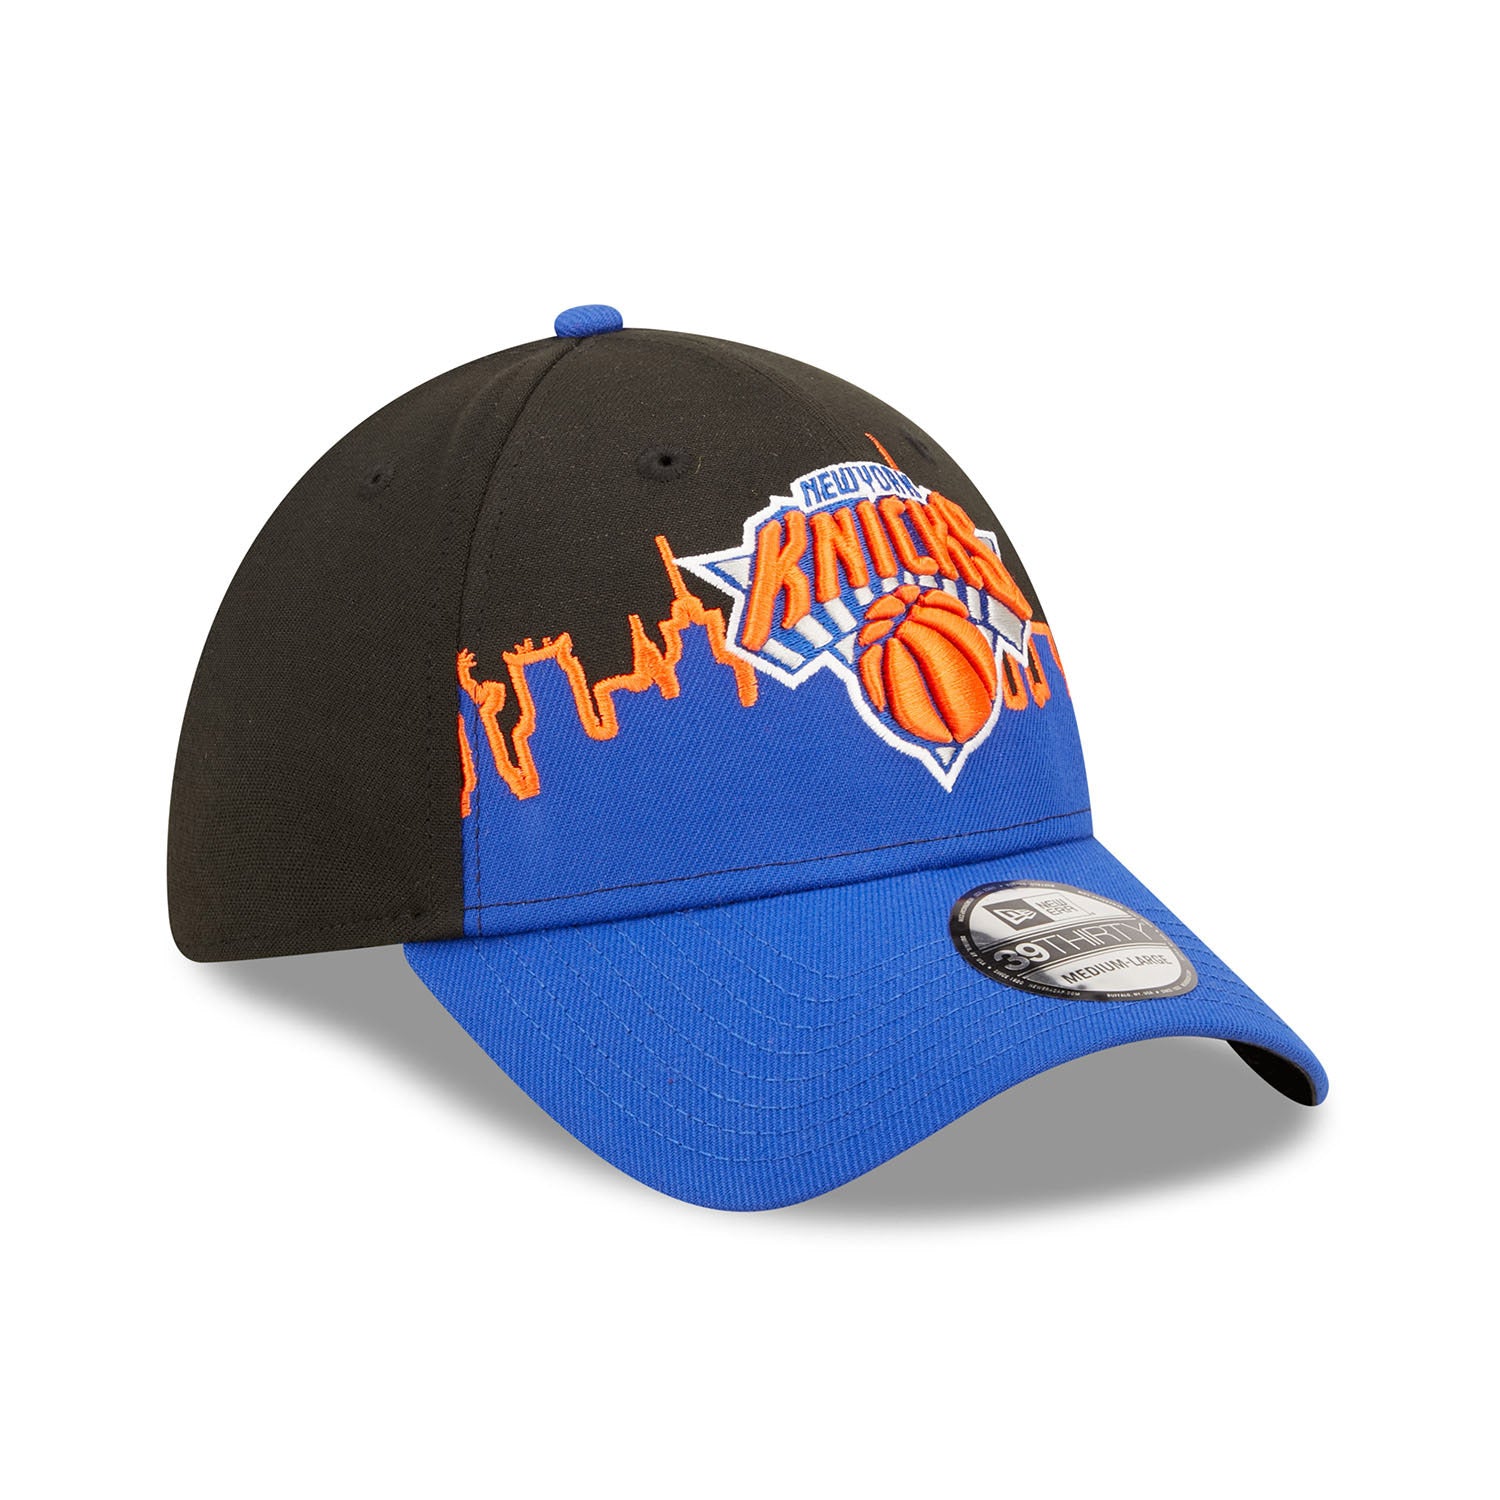 New Era Knicks Skyline Tip Off Stretchfit Hat